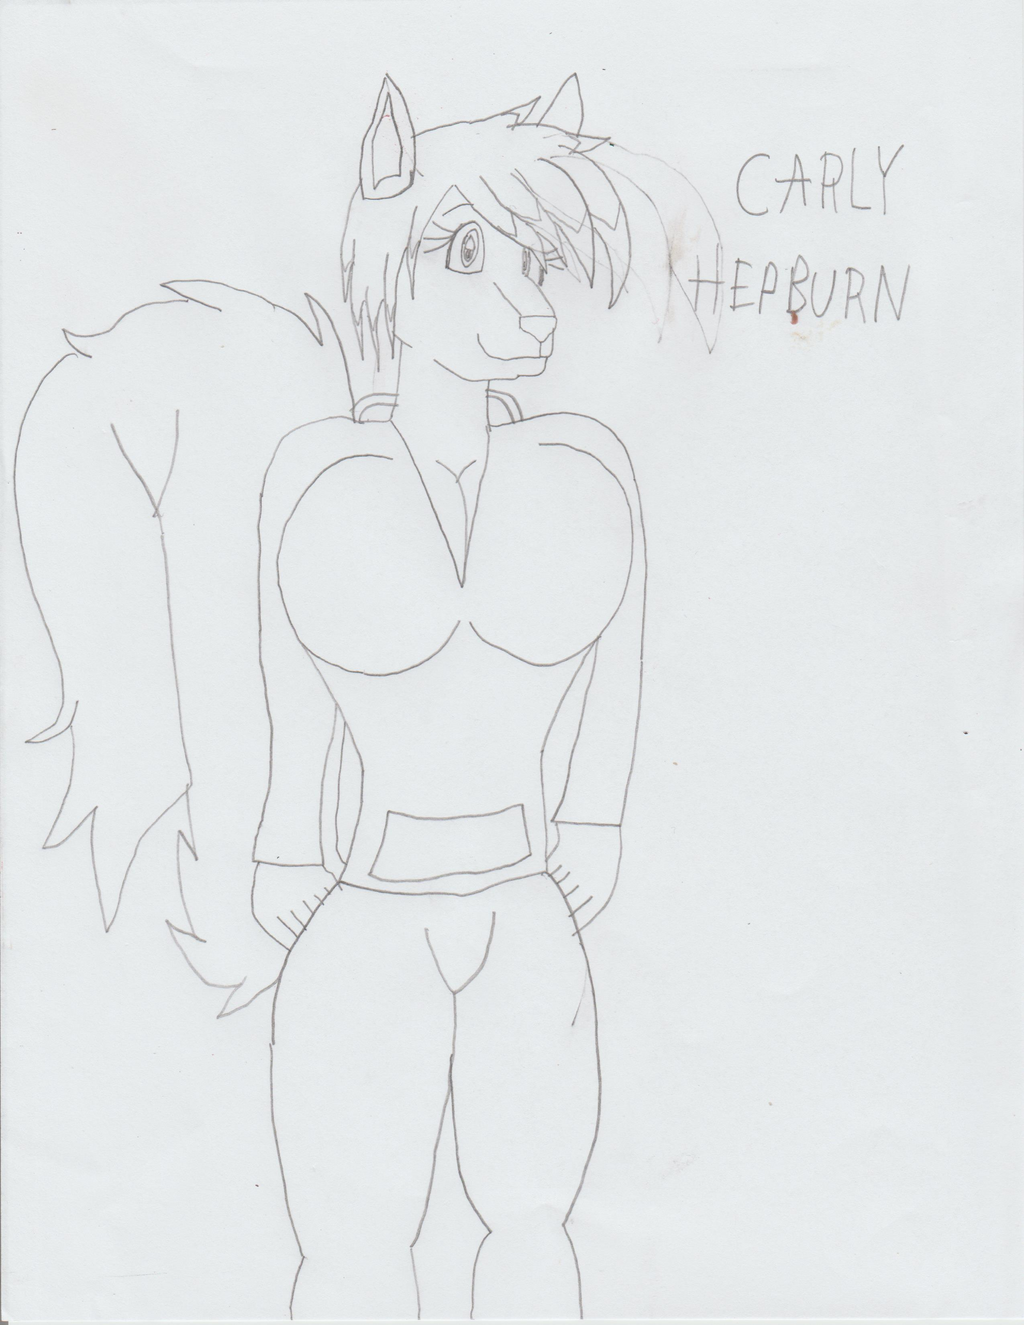 [Draft] - Carly Hepburn